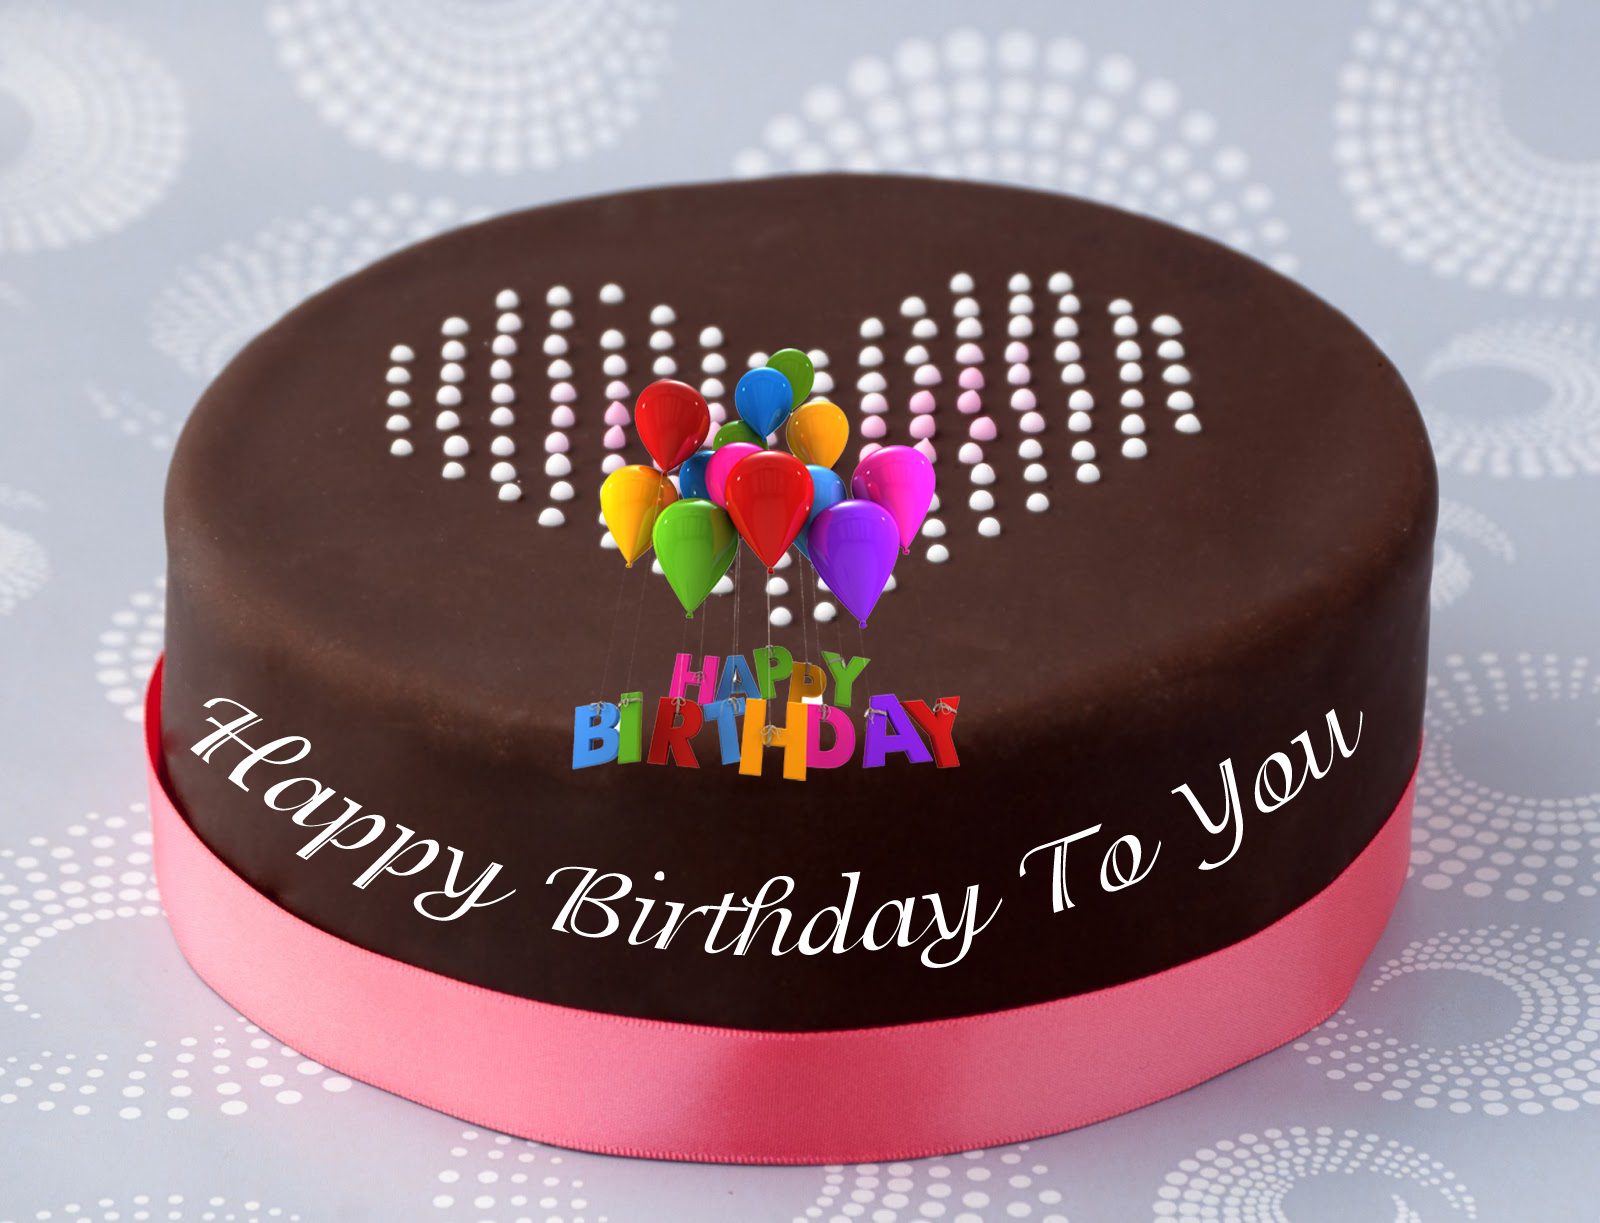 Торт на английском. Торт Happy Birthday. С днём рождения на английском на торте. Happy Birthday to you торт. Торт Happy Birthday мужчине.